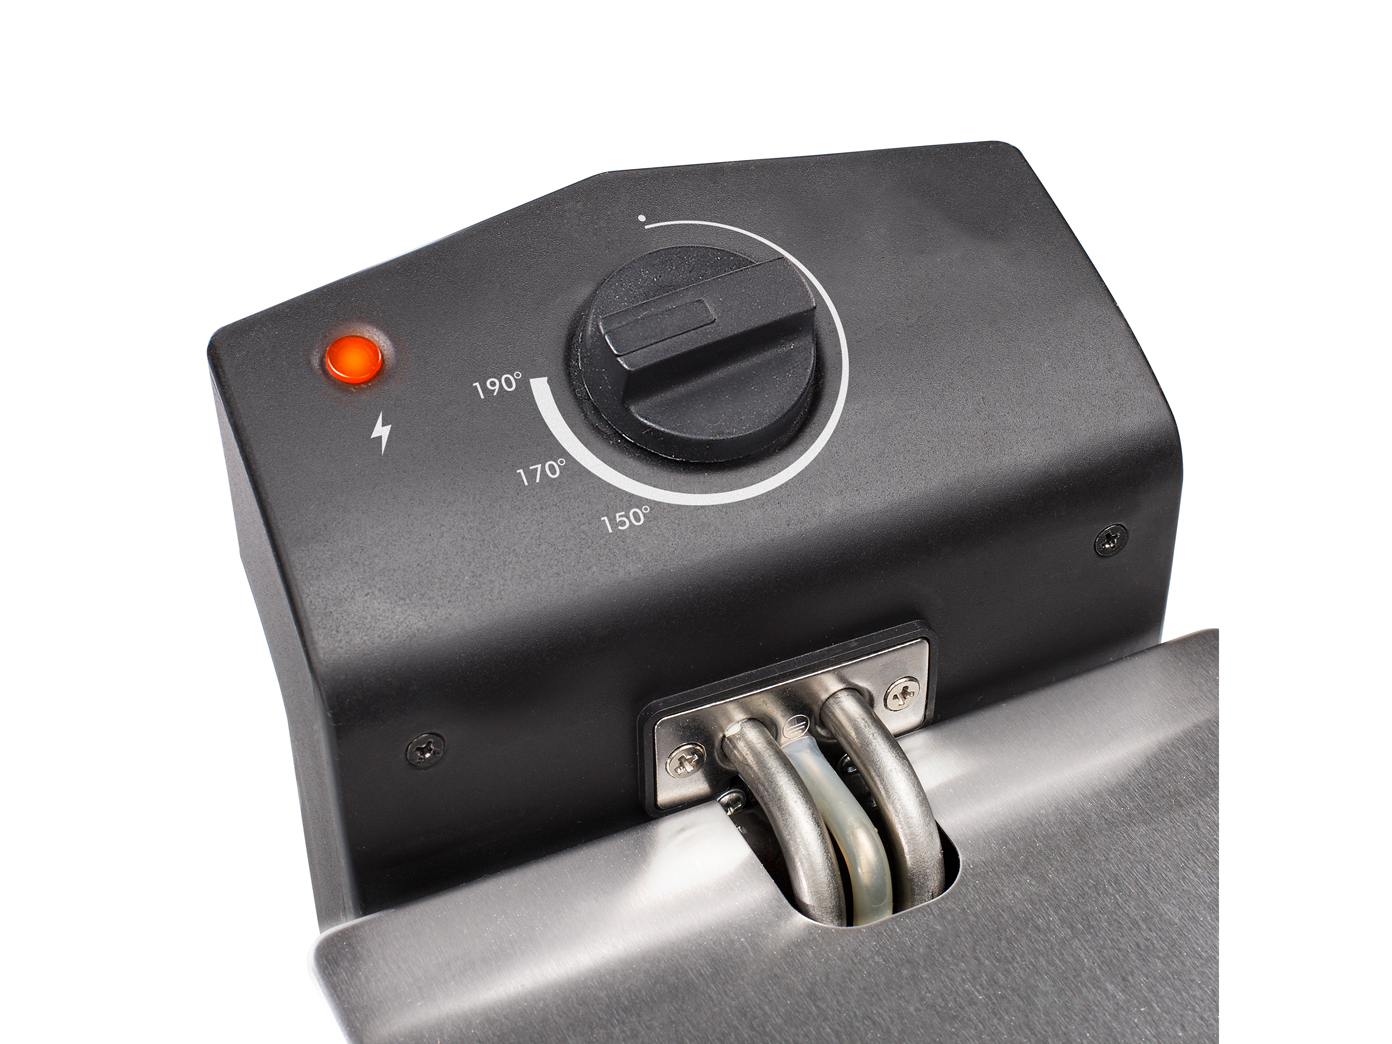 Thermostat 2000 Fritteuse Große & Watt Kaltzonen Watt 2000 Liter Emaille-Behälter 3 regelbarem TRISTAR mit Kaltzonen Fritteuse, Silber